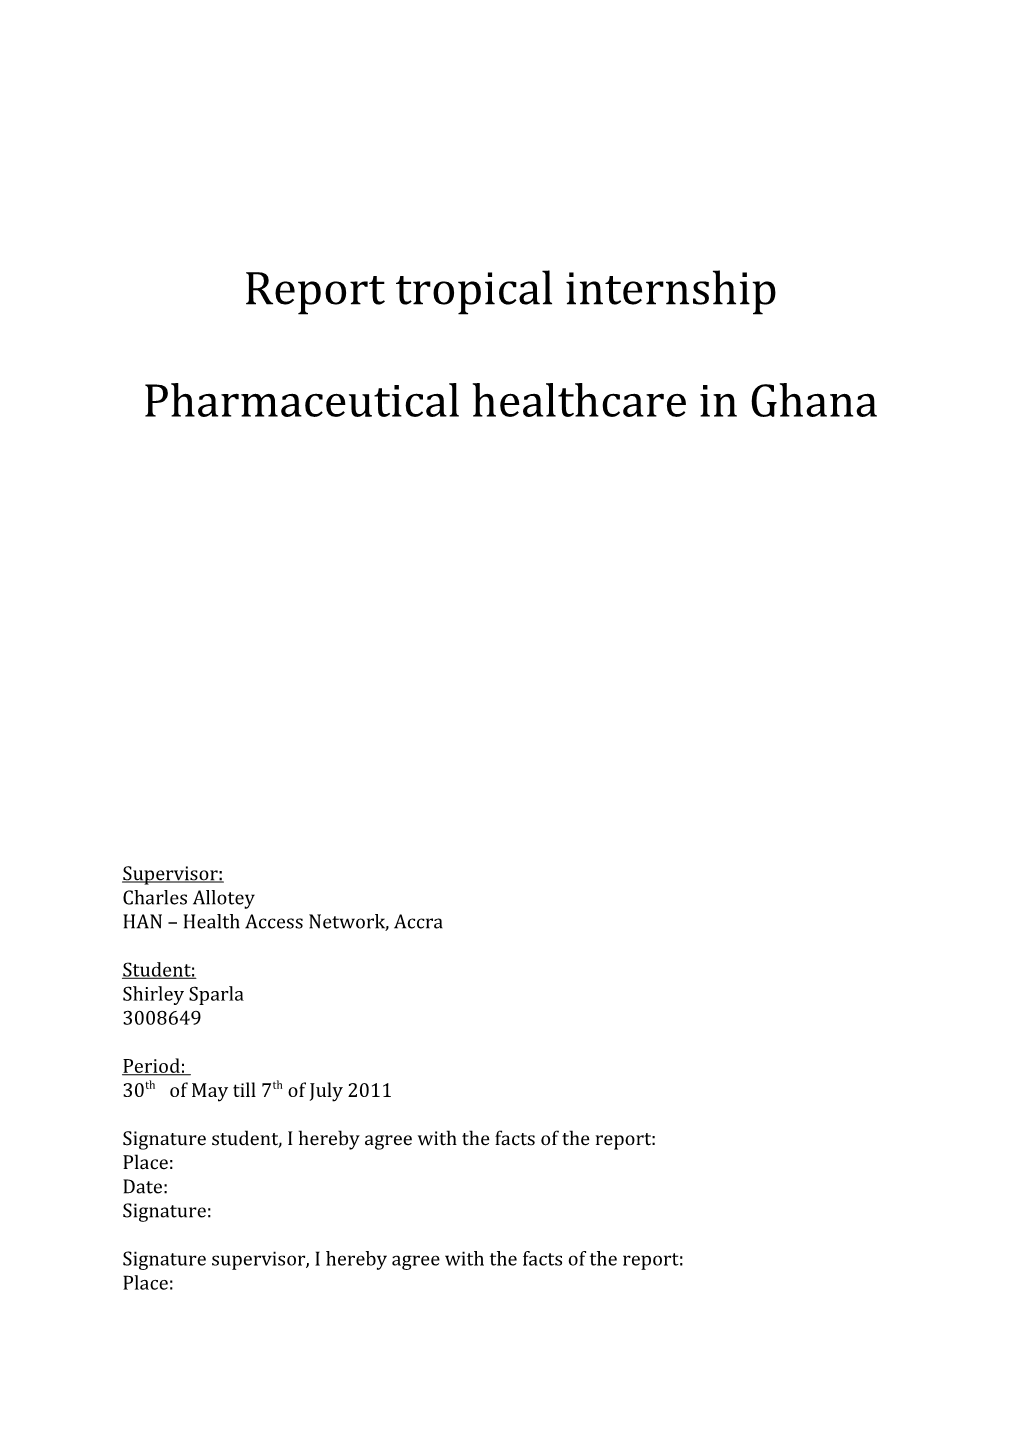 Report Tropical Internship